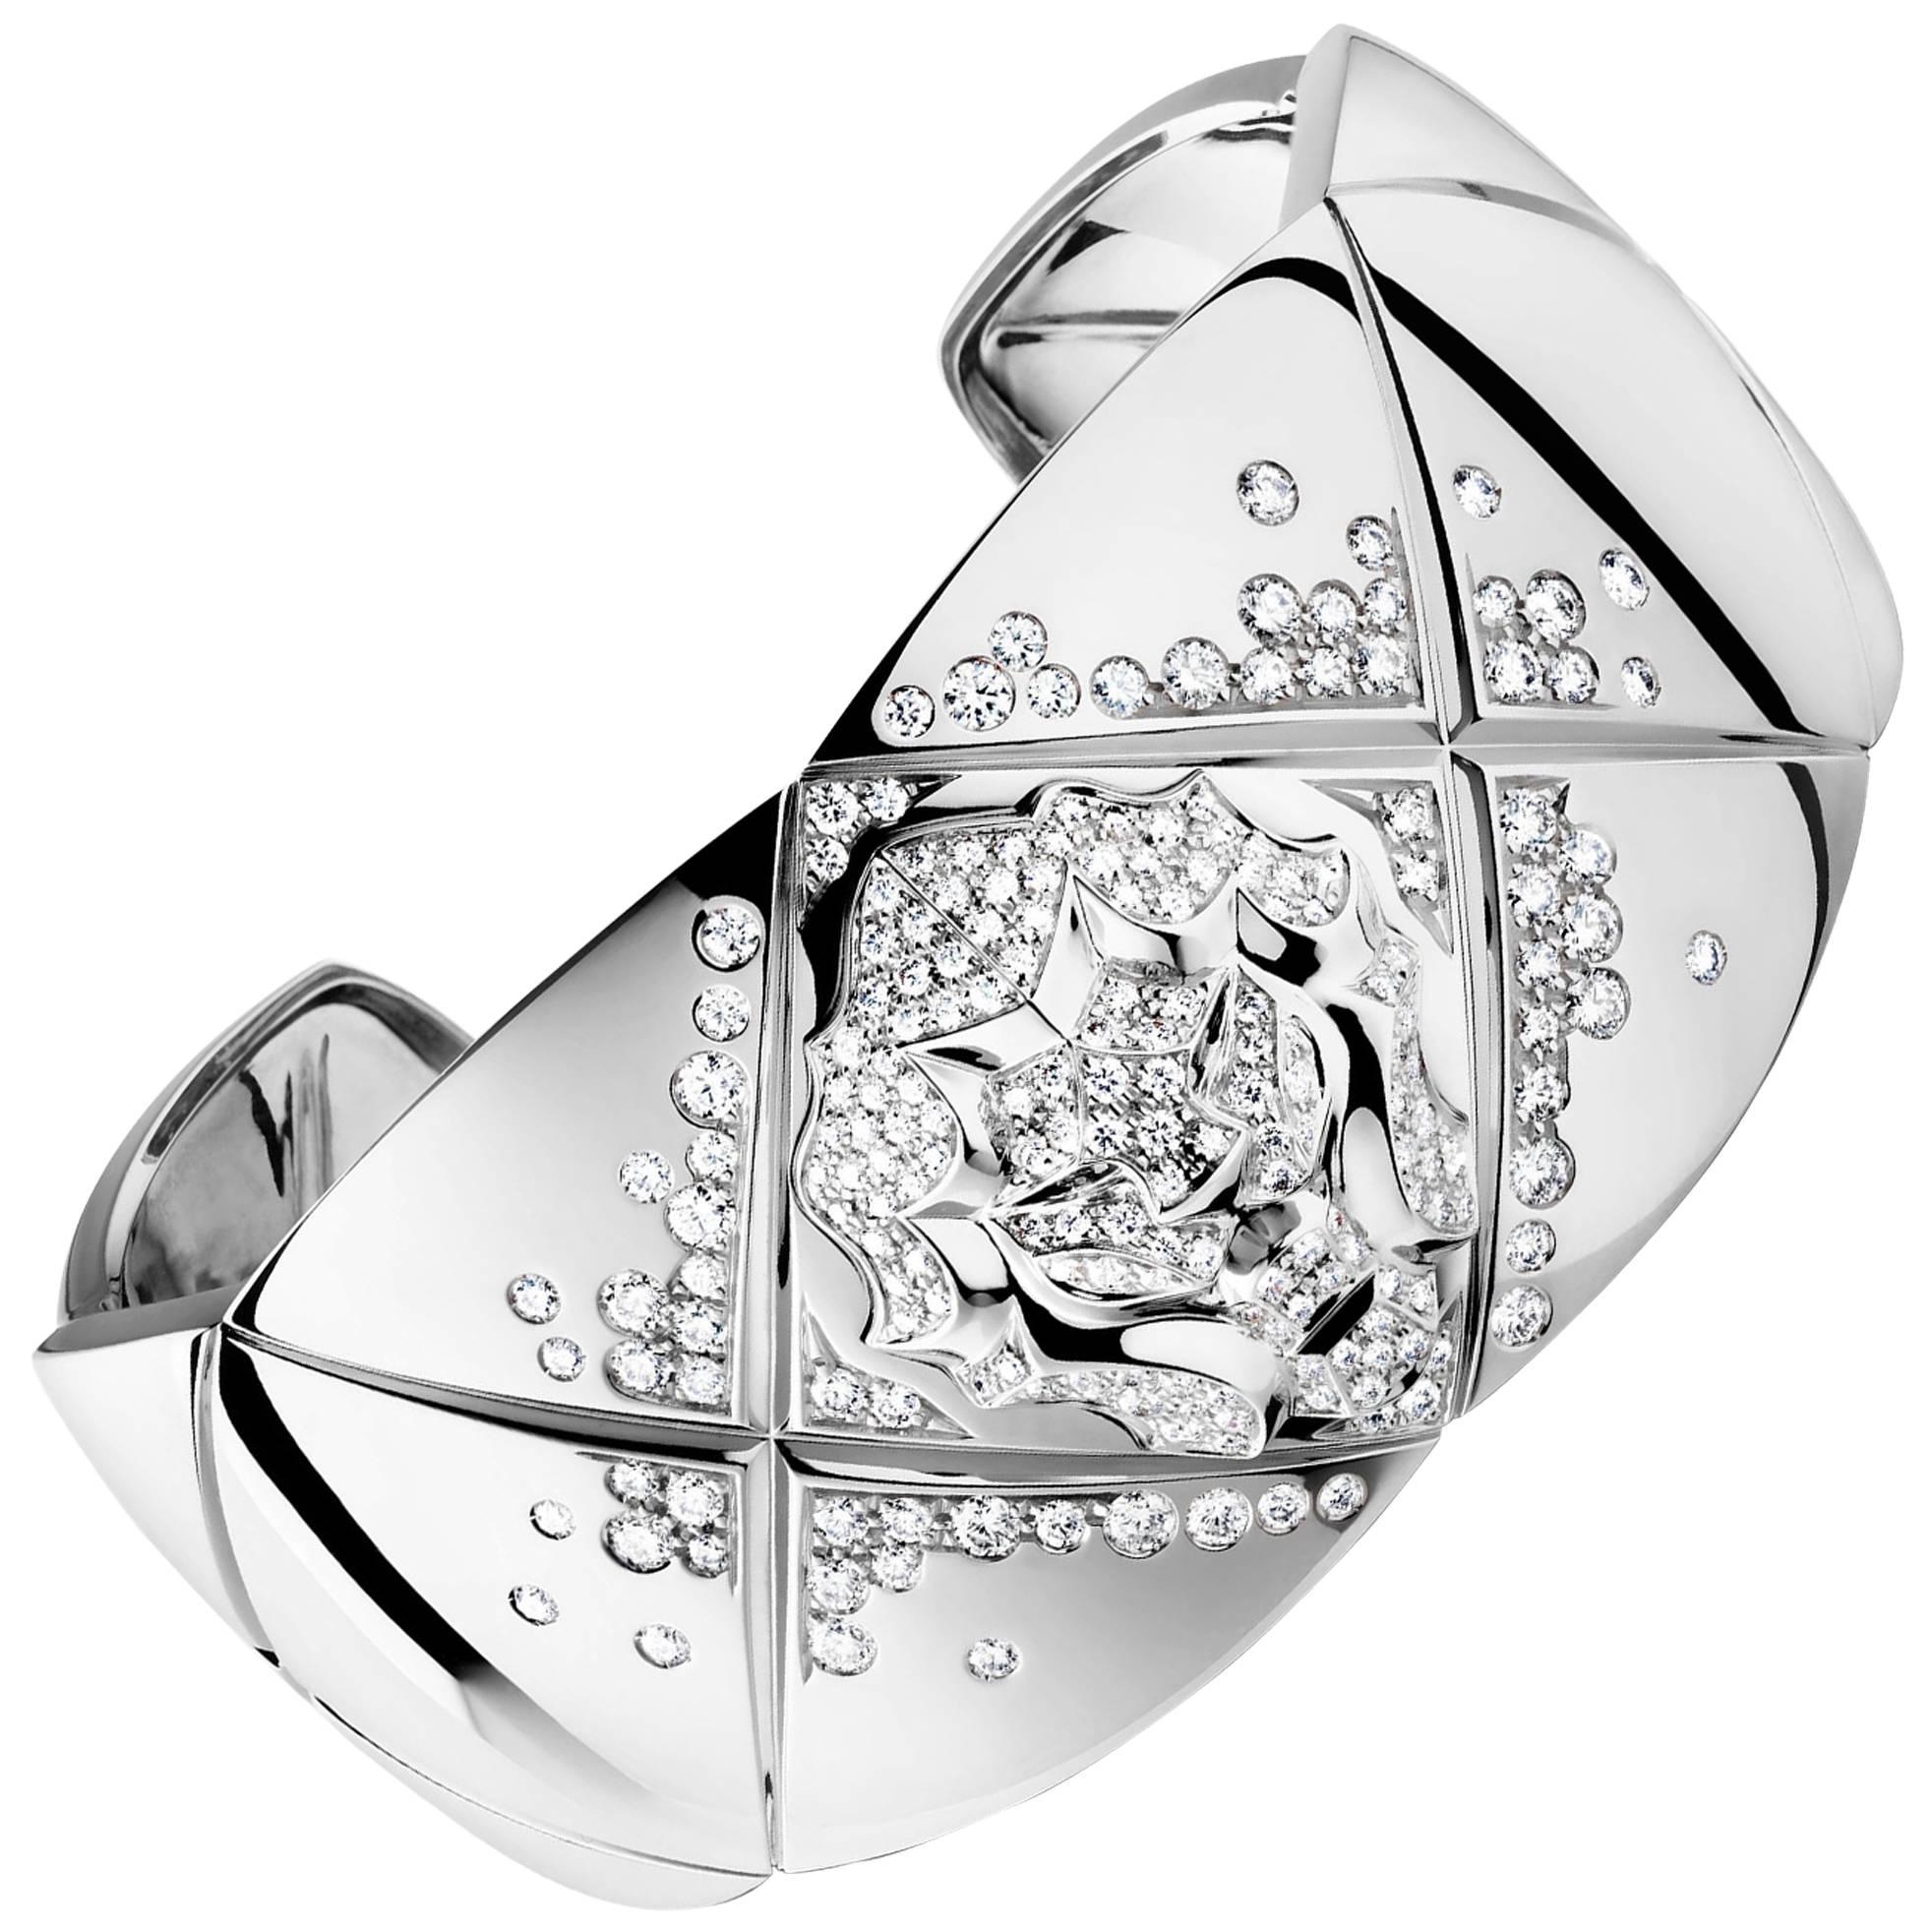 Chanel Coco Crush Diamond Bangle Bracelet